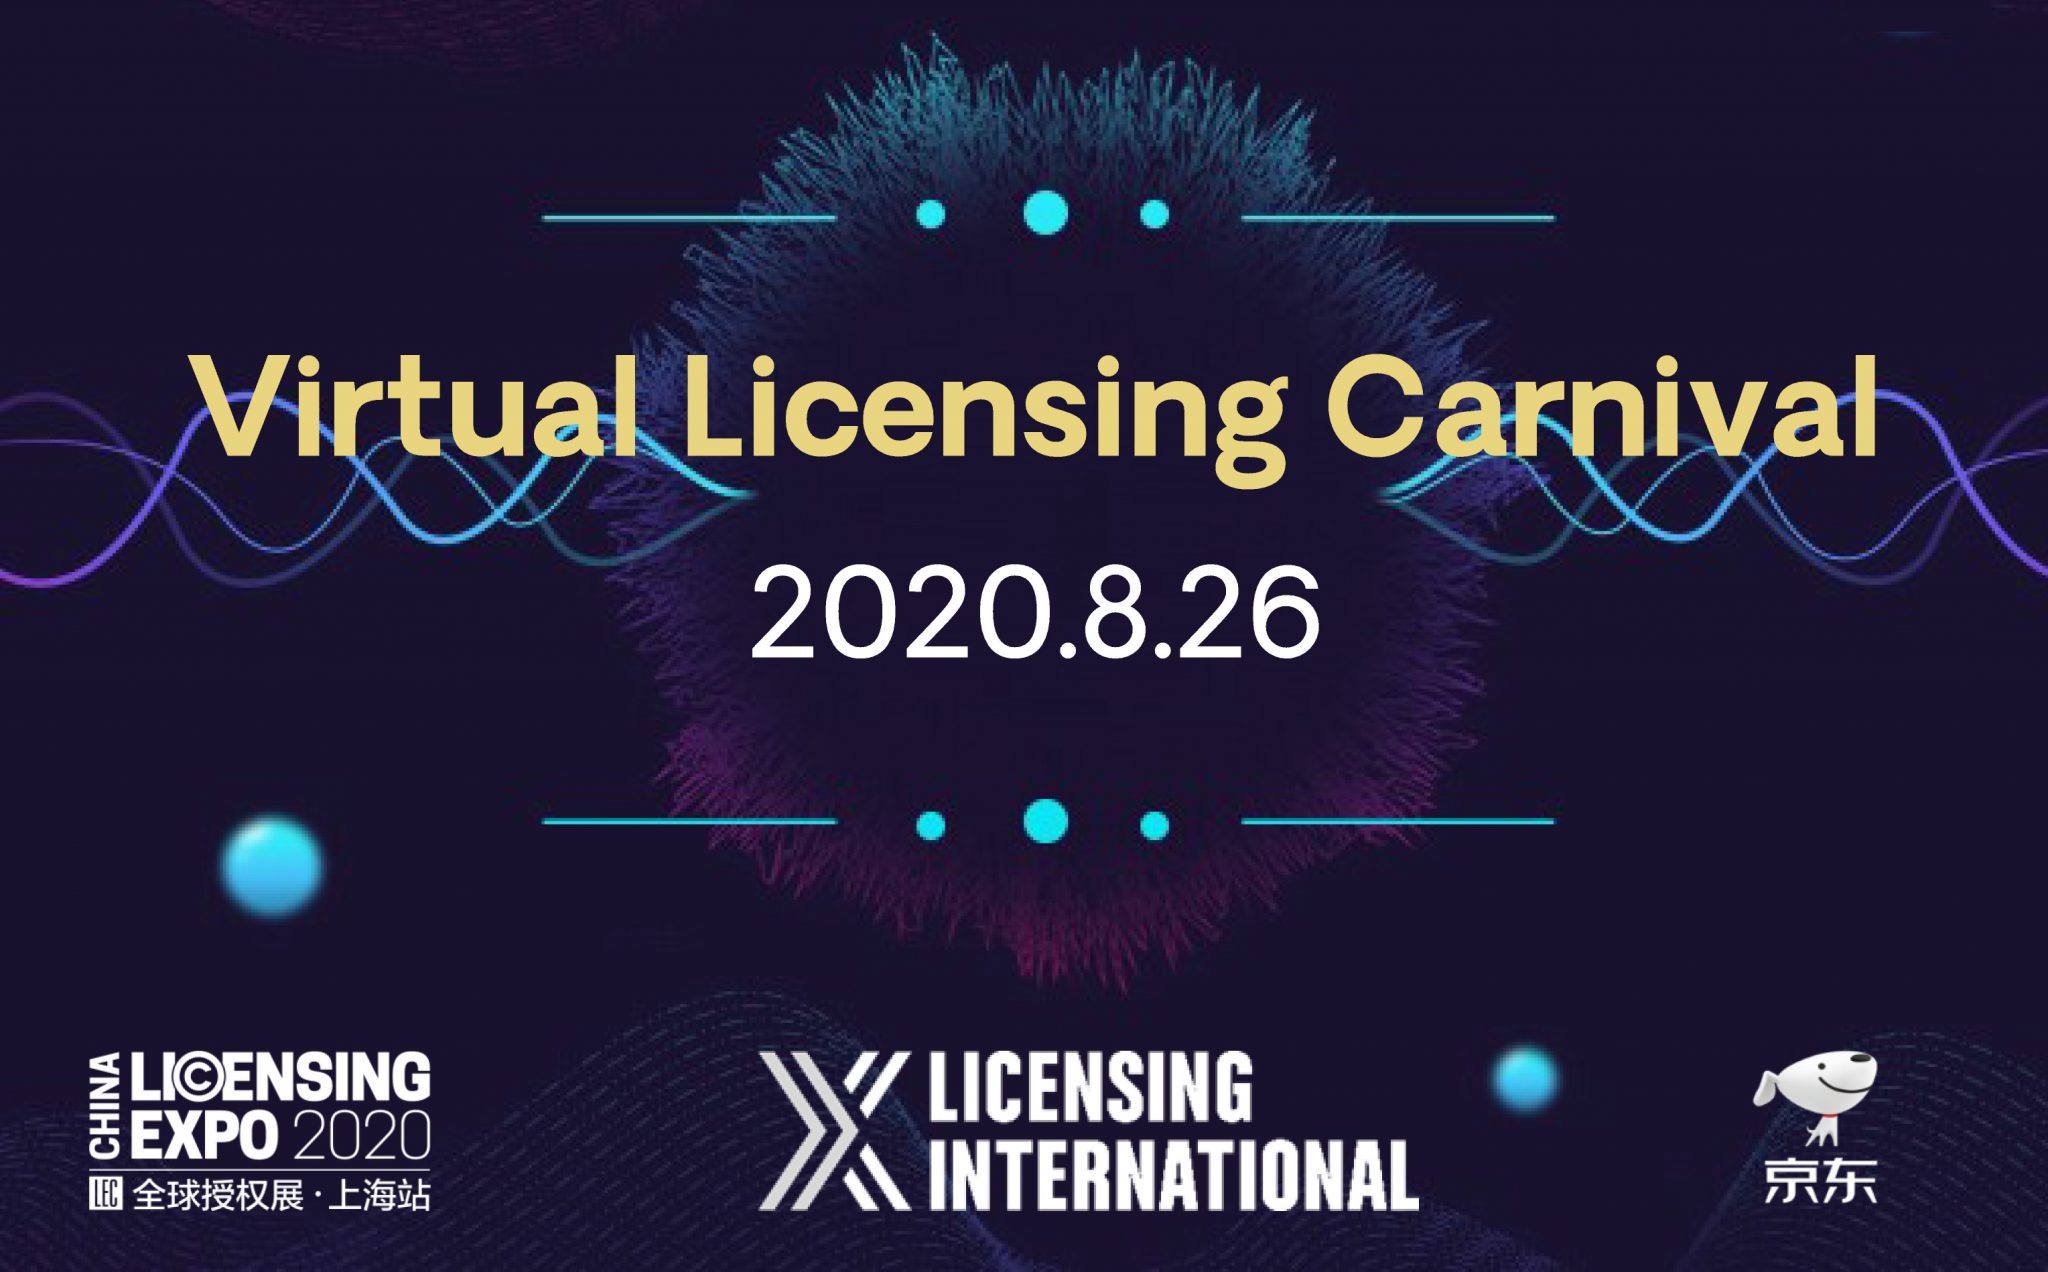 Virtual Licensing Carnival Licensing International